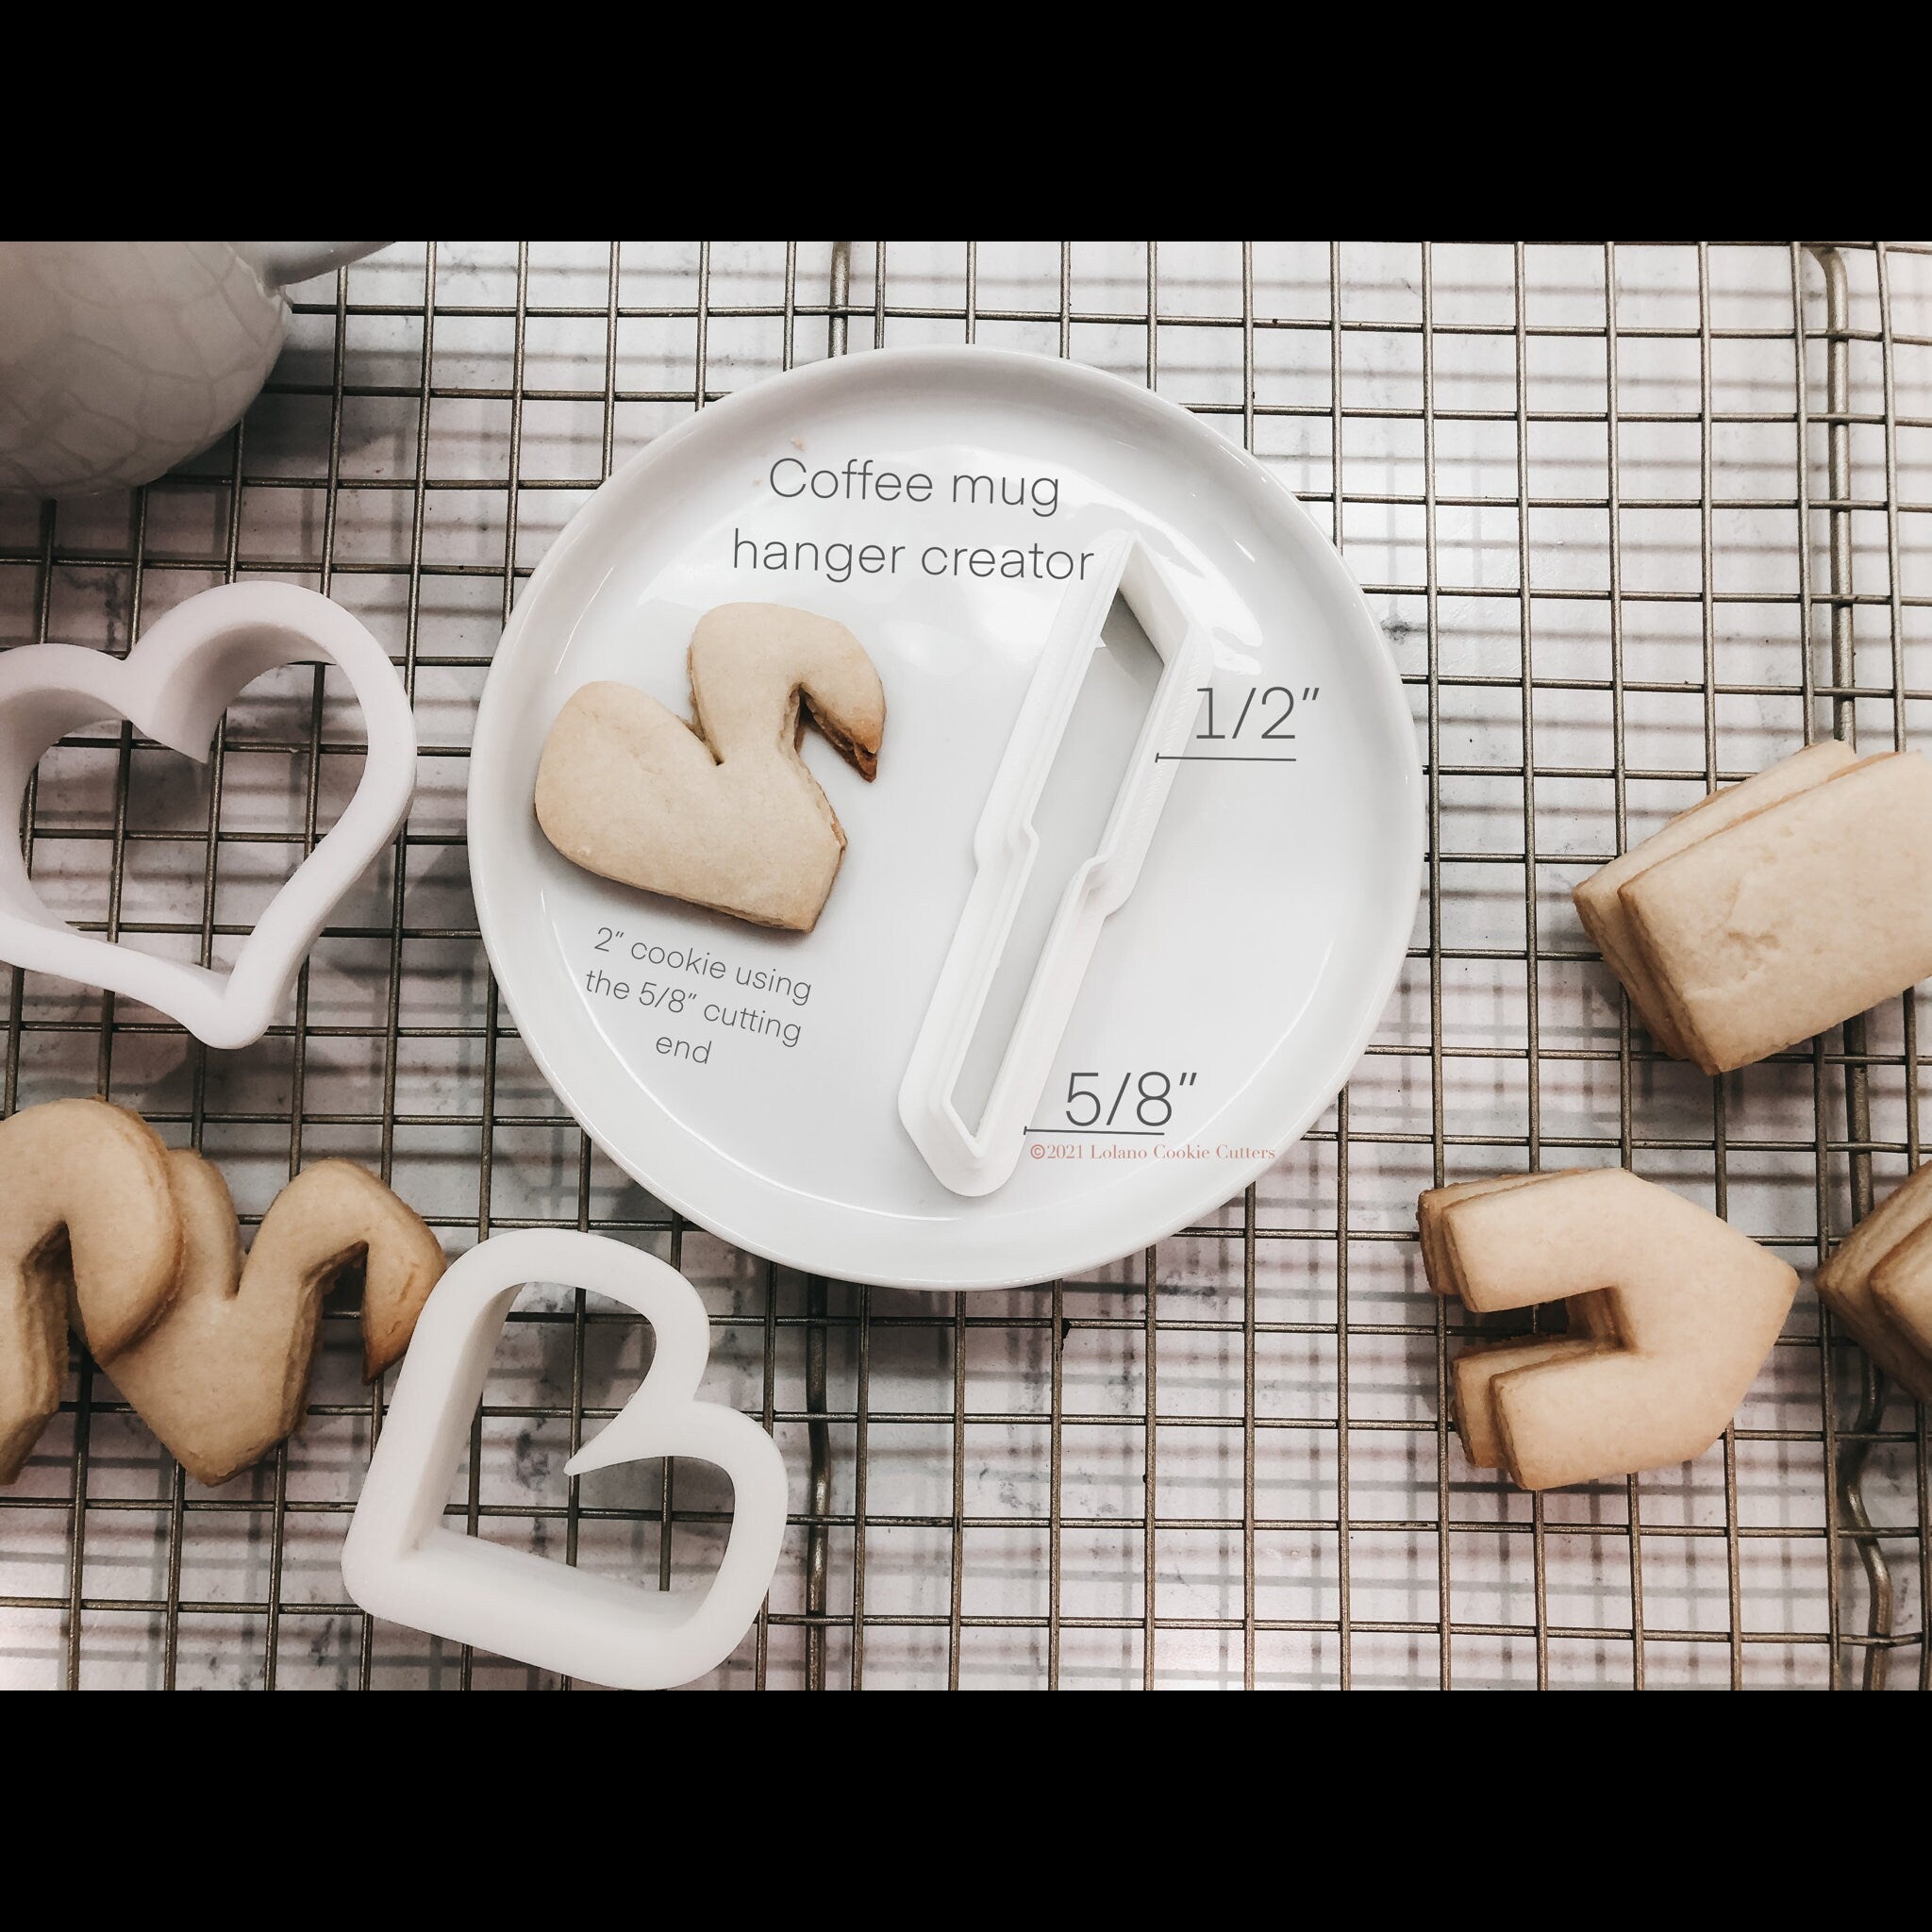 Coffee mug hanger cookie cutter creator